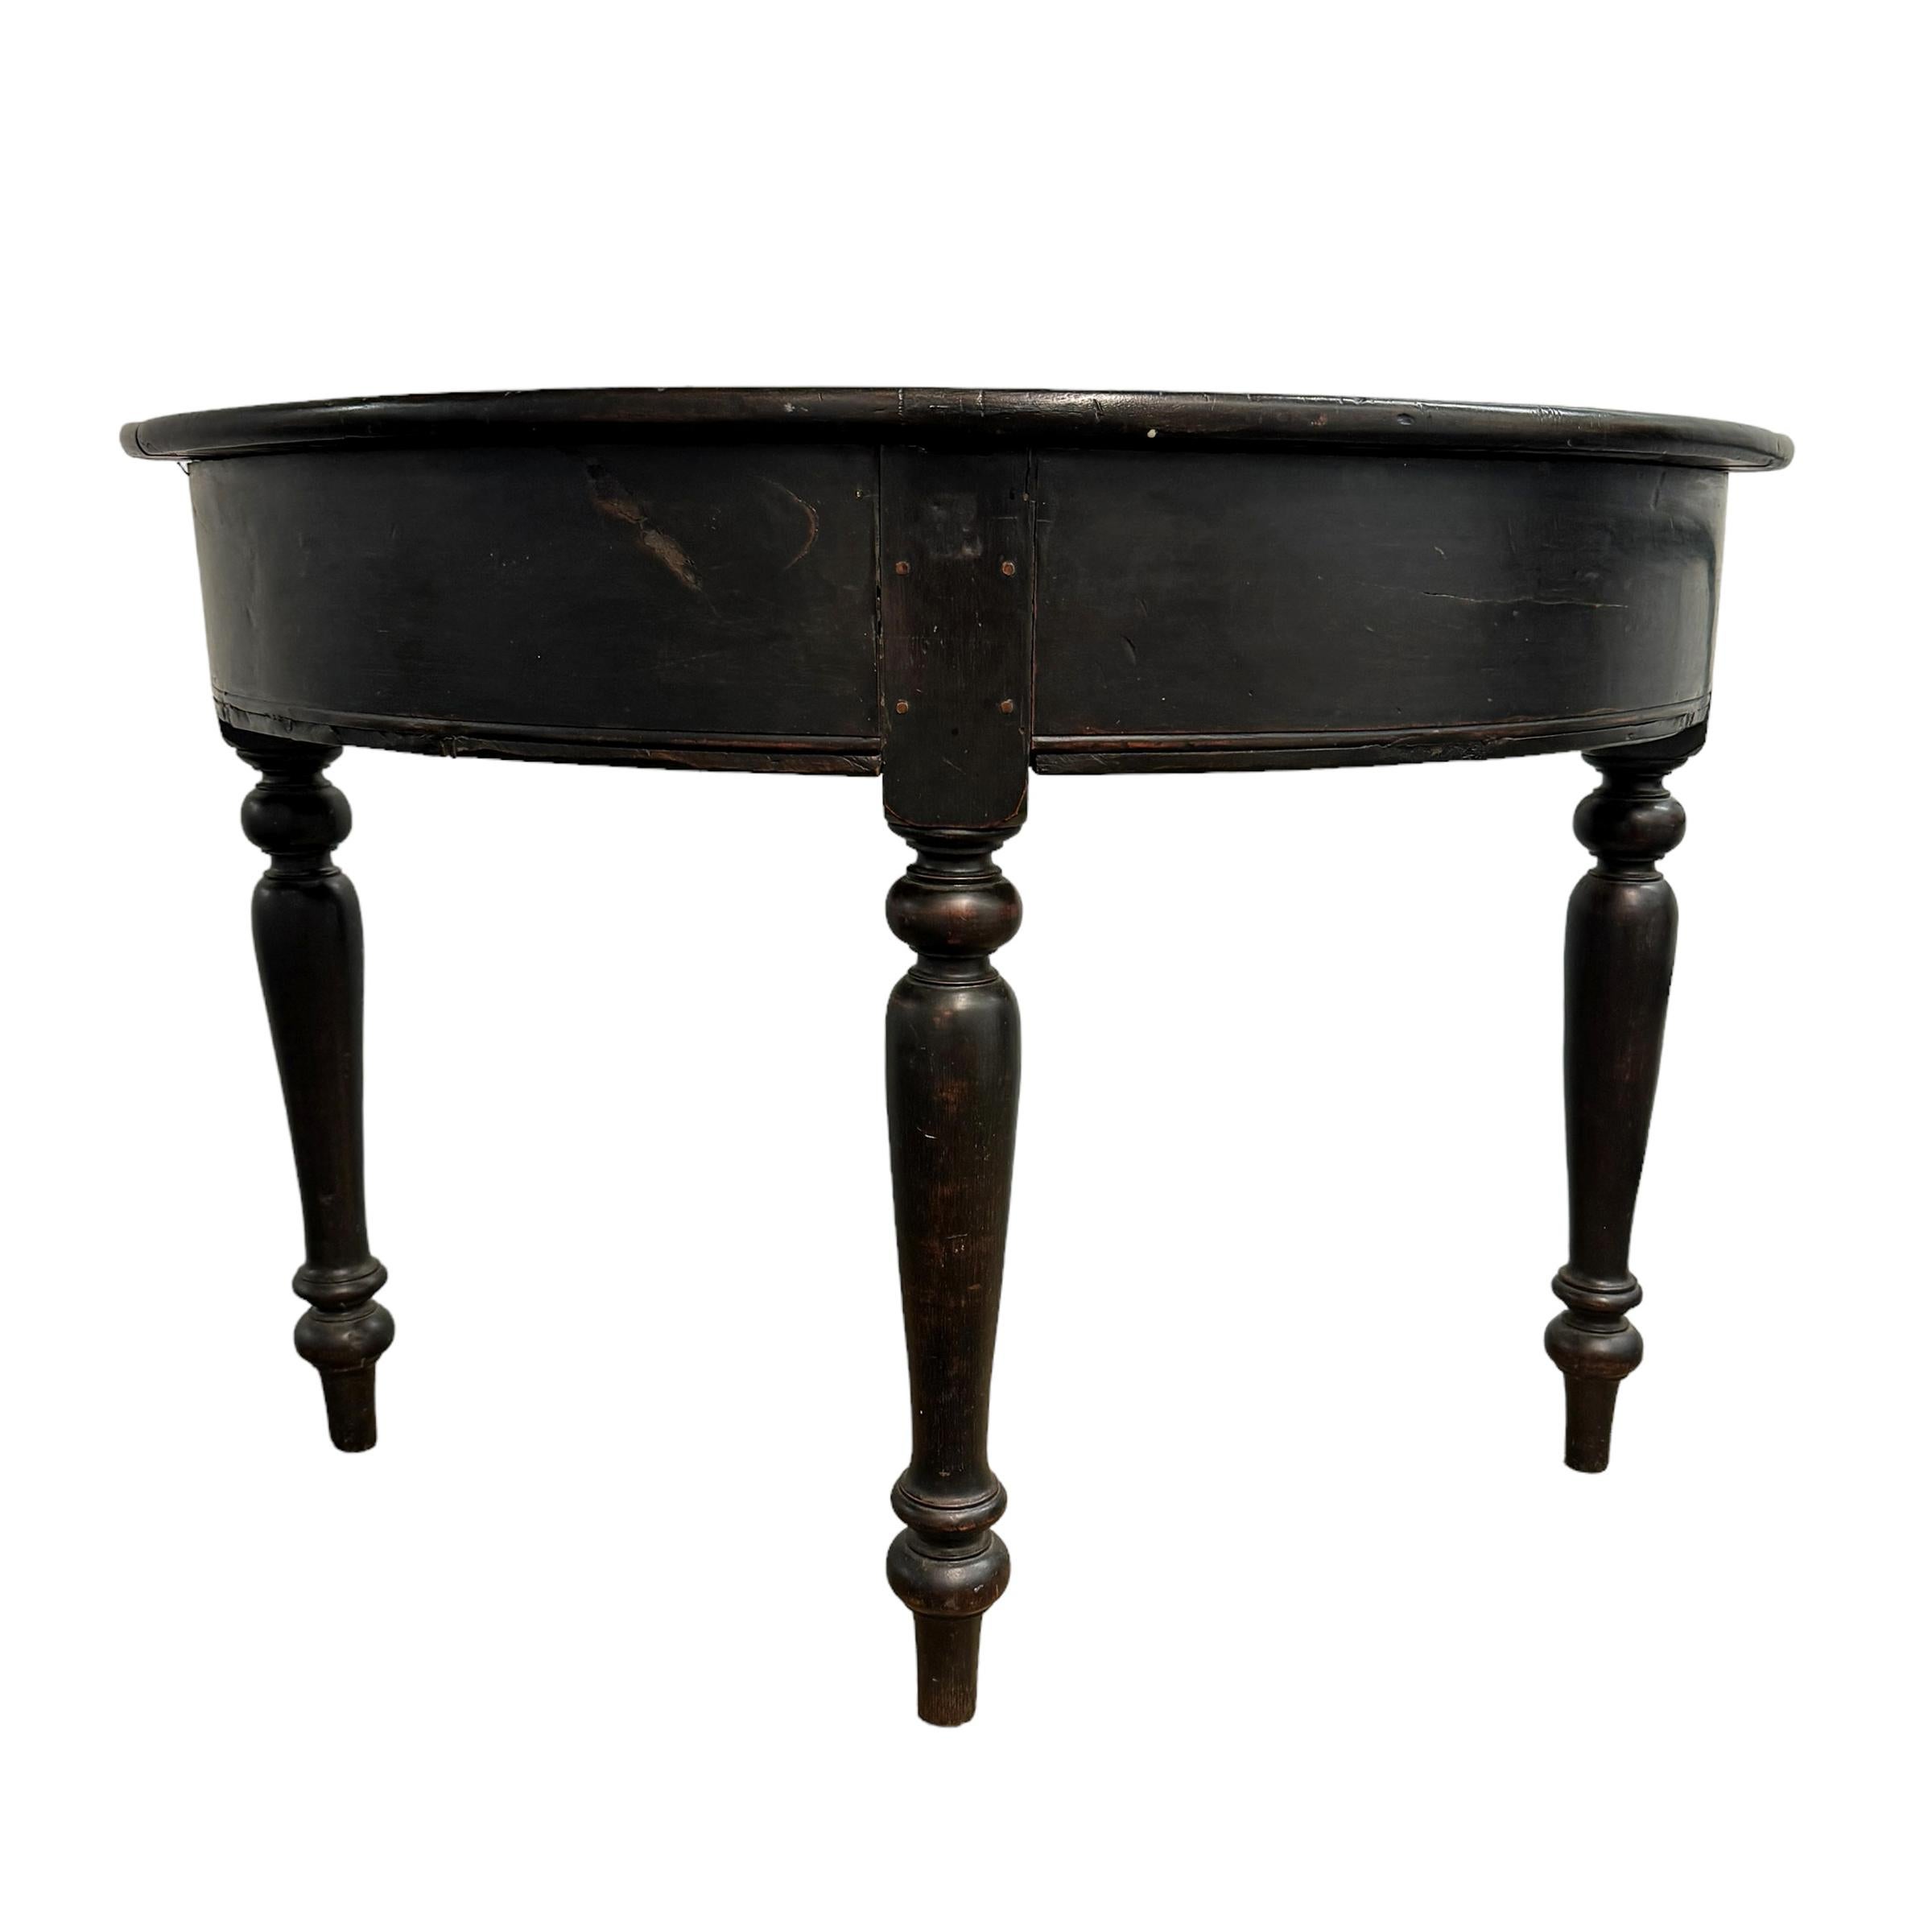 Primitive 19th Century American Demilune Table For Sale